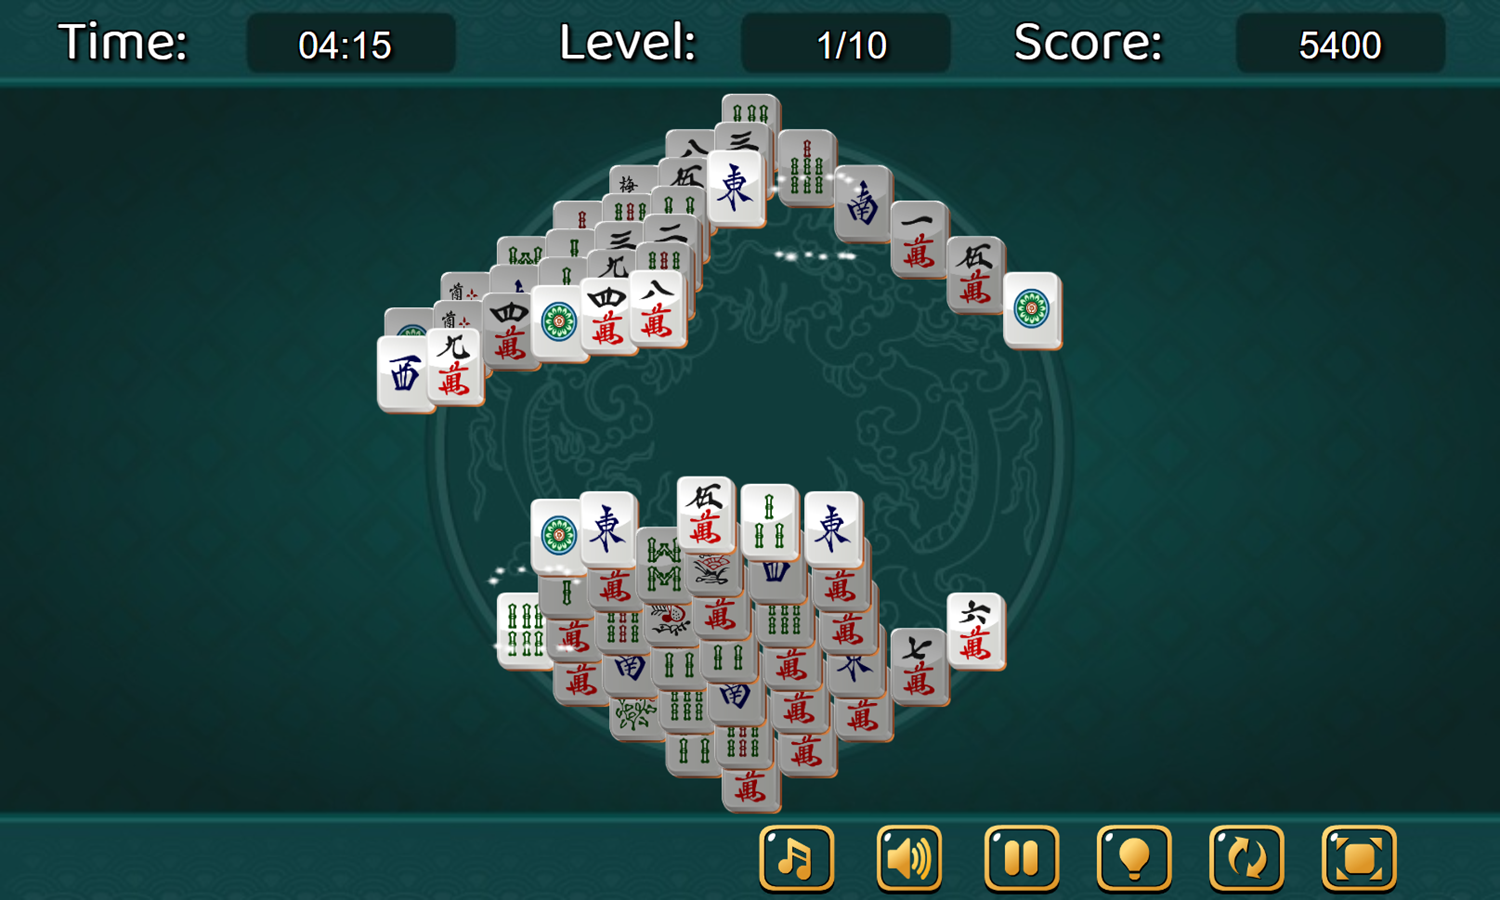 Mahjong Tower Game Level Play Screenshot.